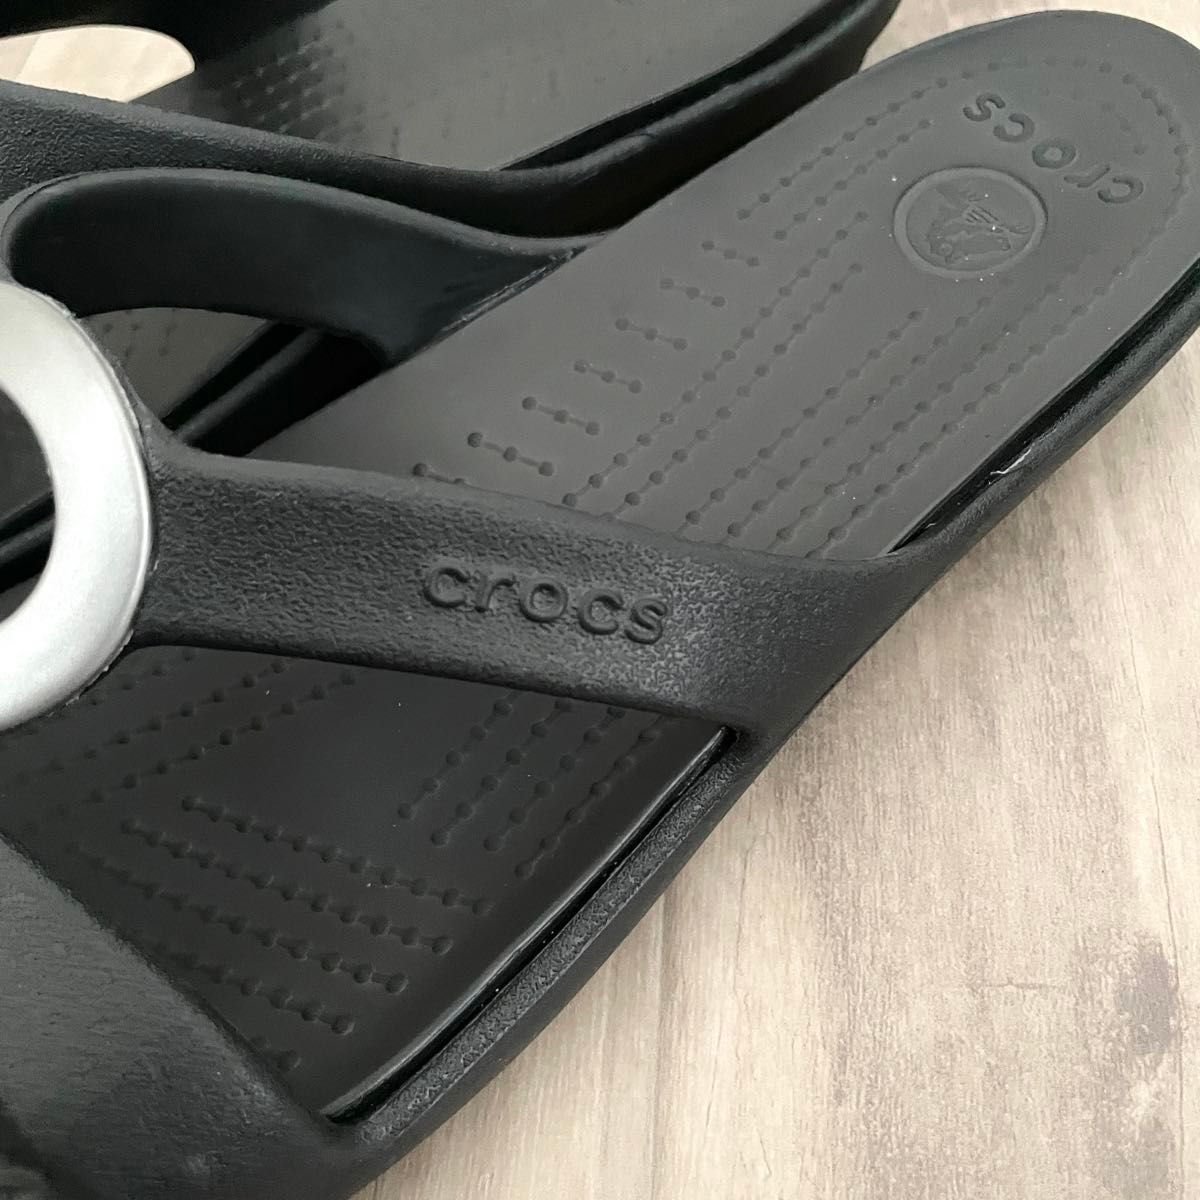 qtr様専用【crocs】 クロックス サンダル ミュール レディース 黒 ブラック 匿名配送 夏靴 25.0